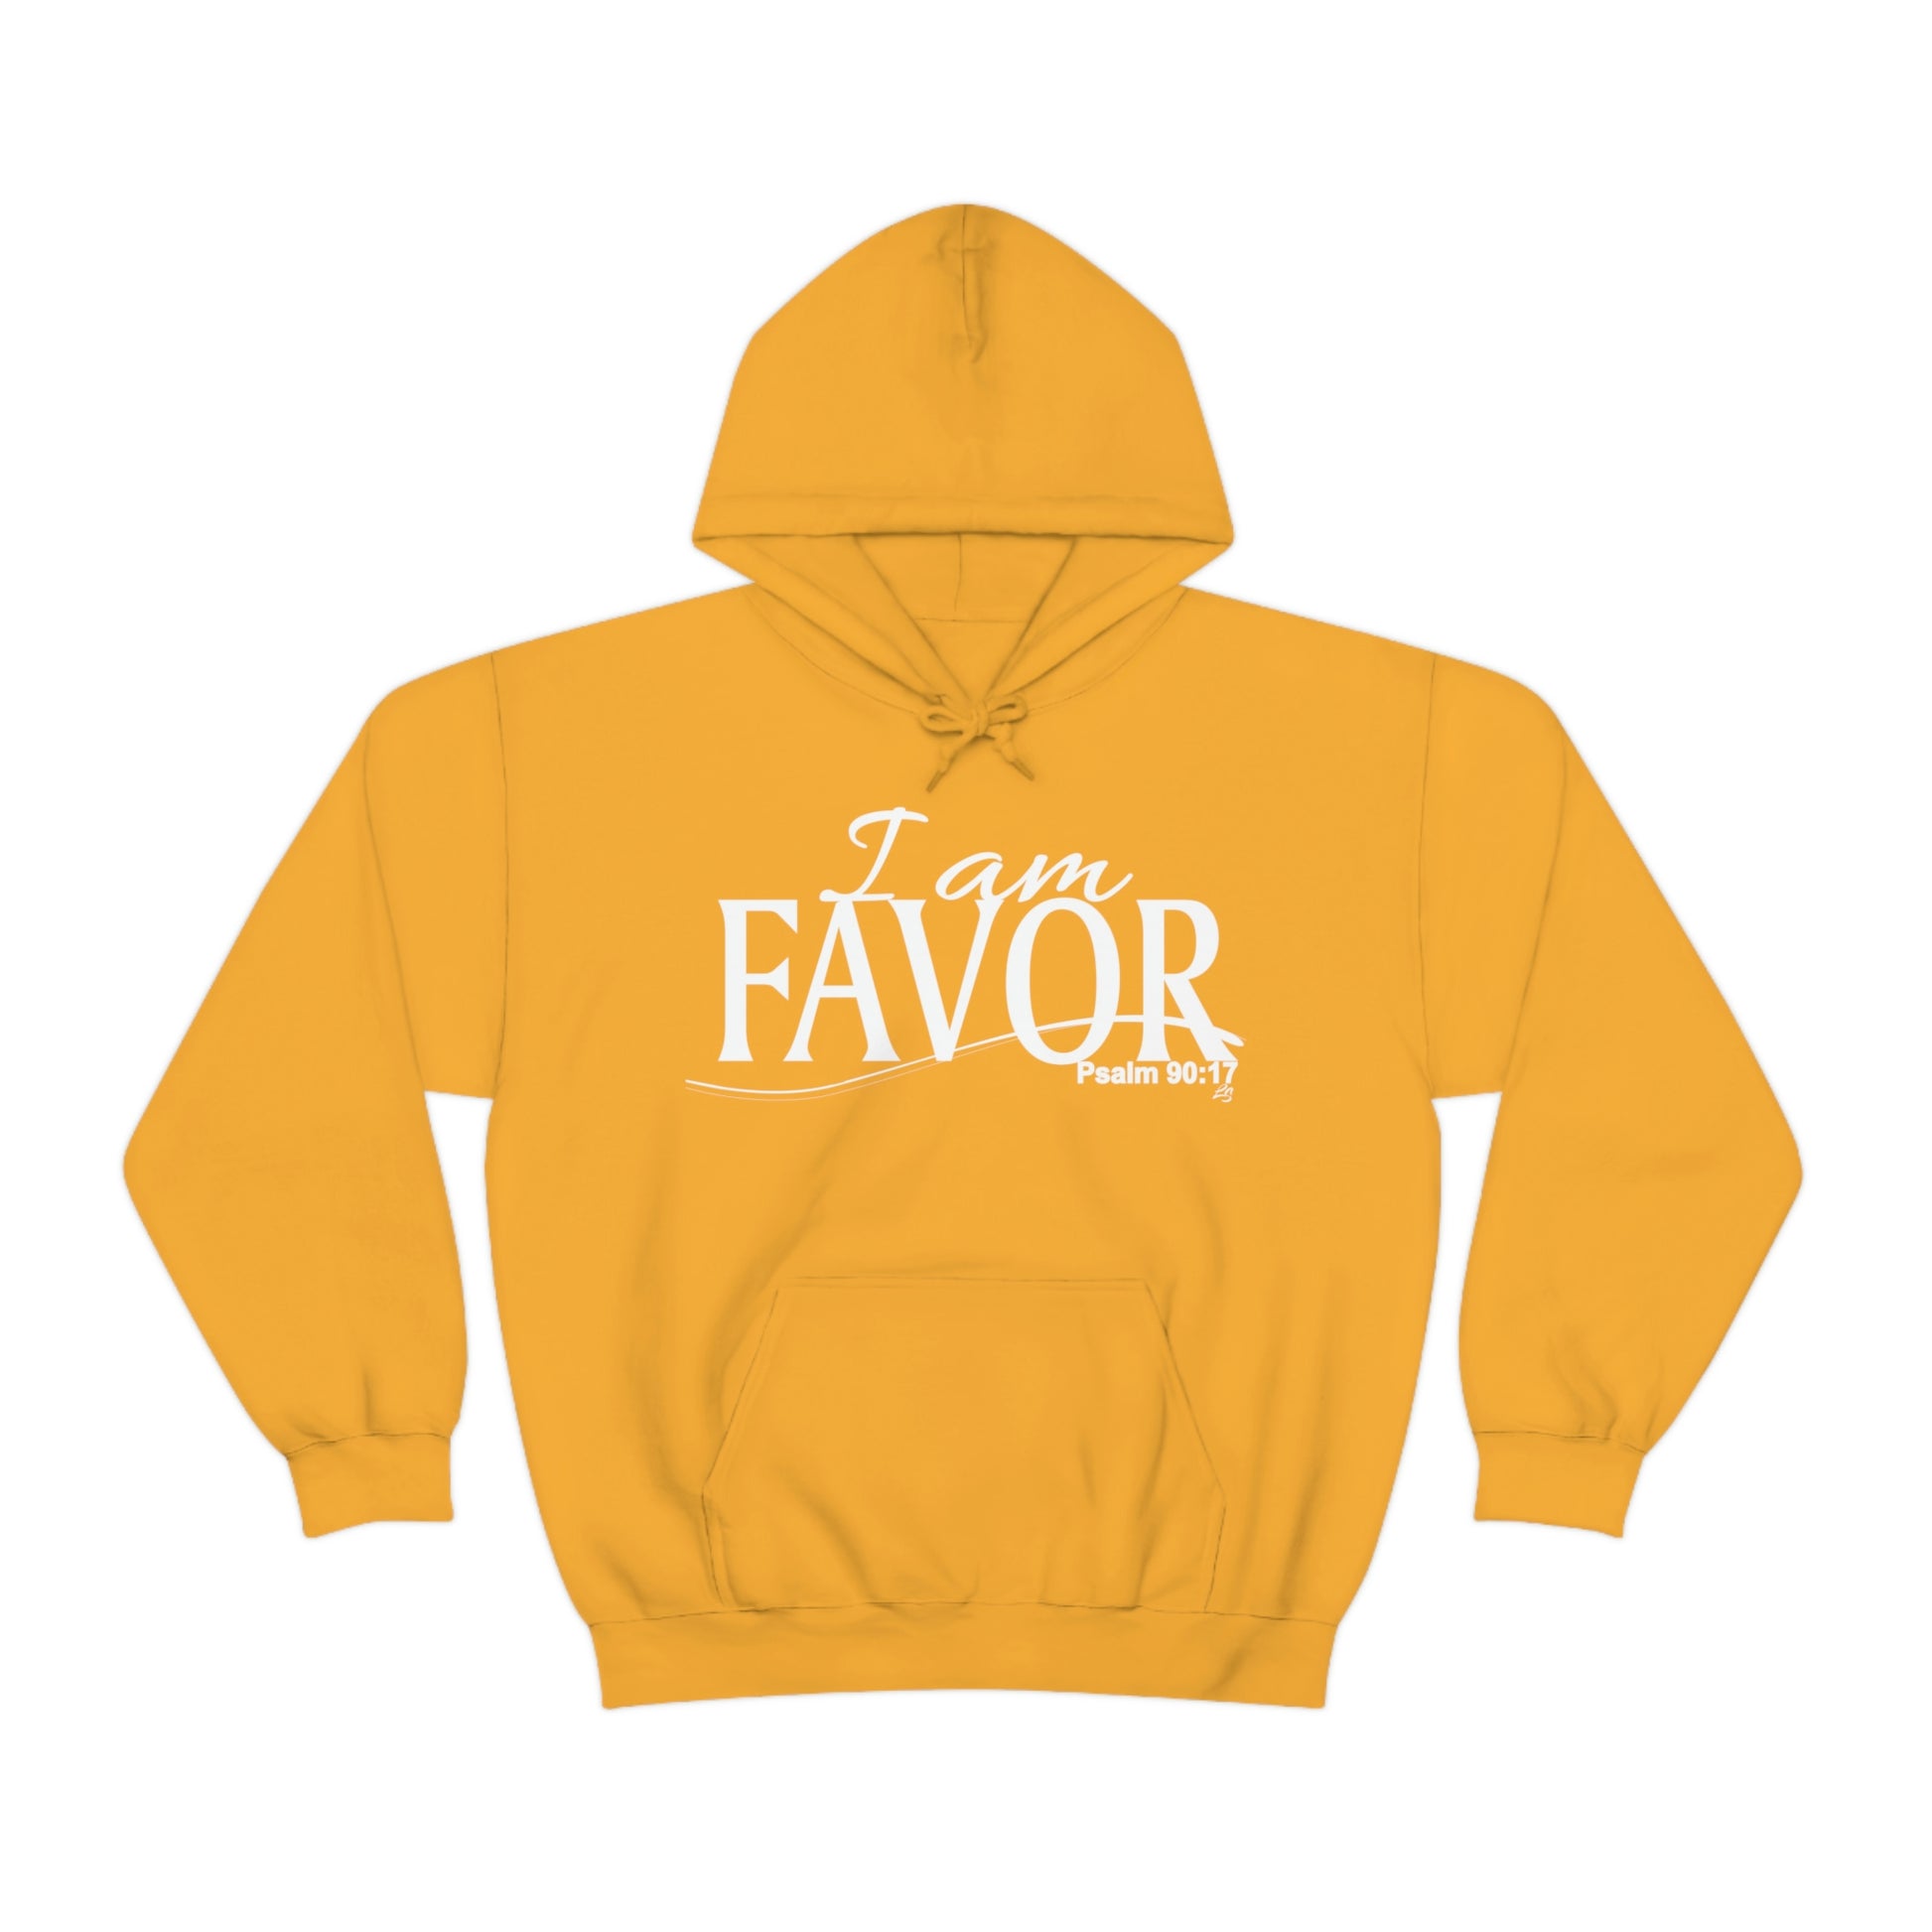 Yellow I AM FAVOR hoodie